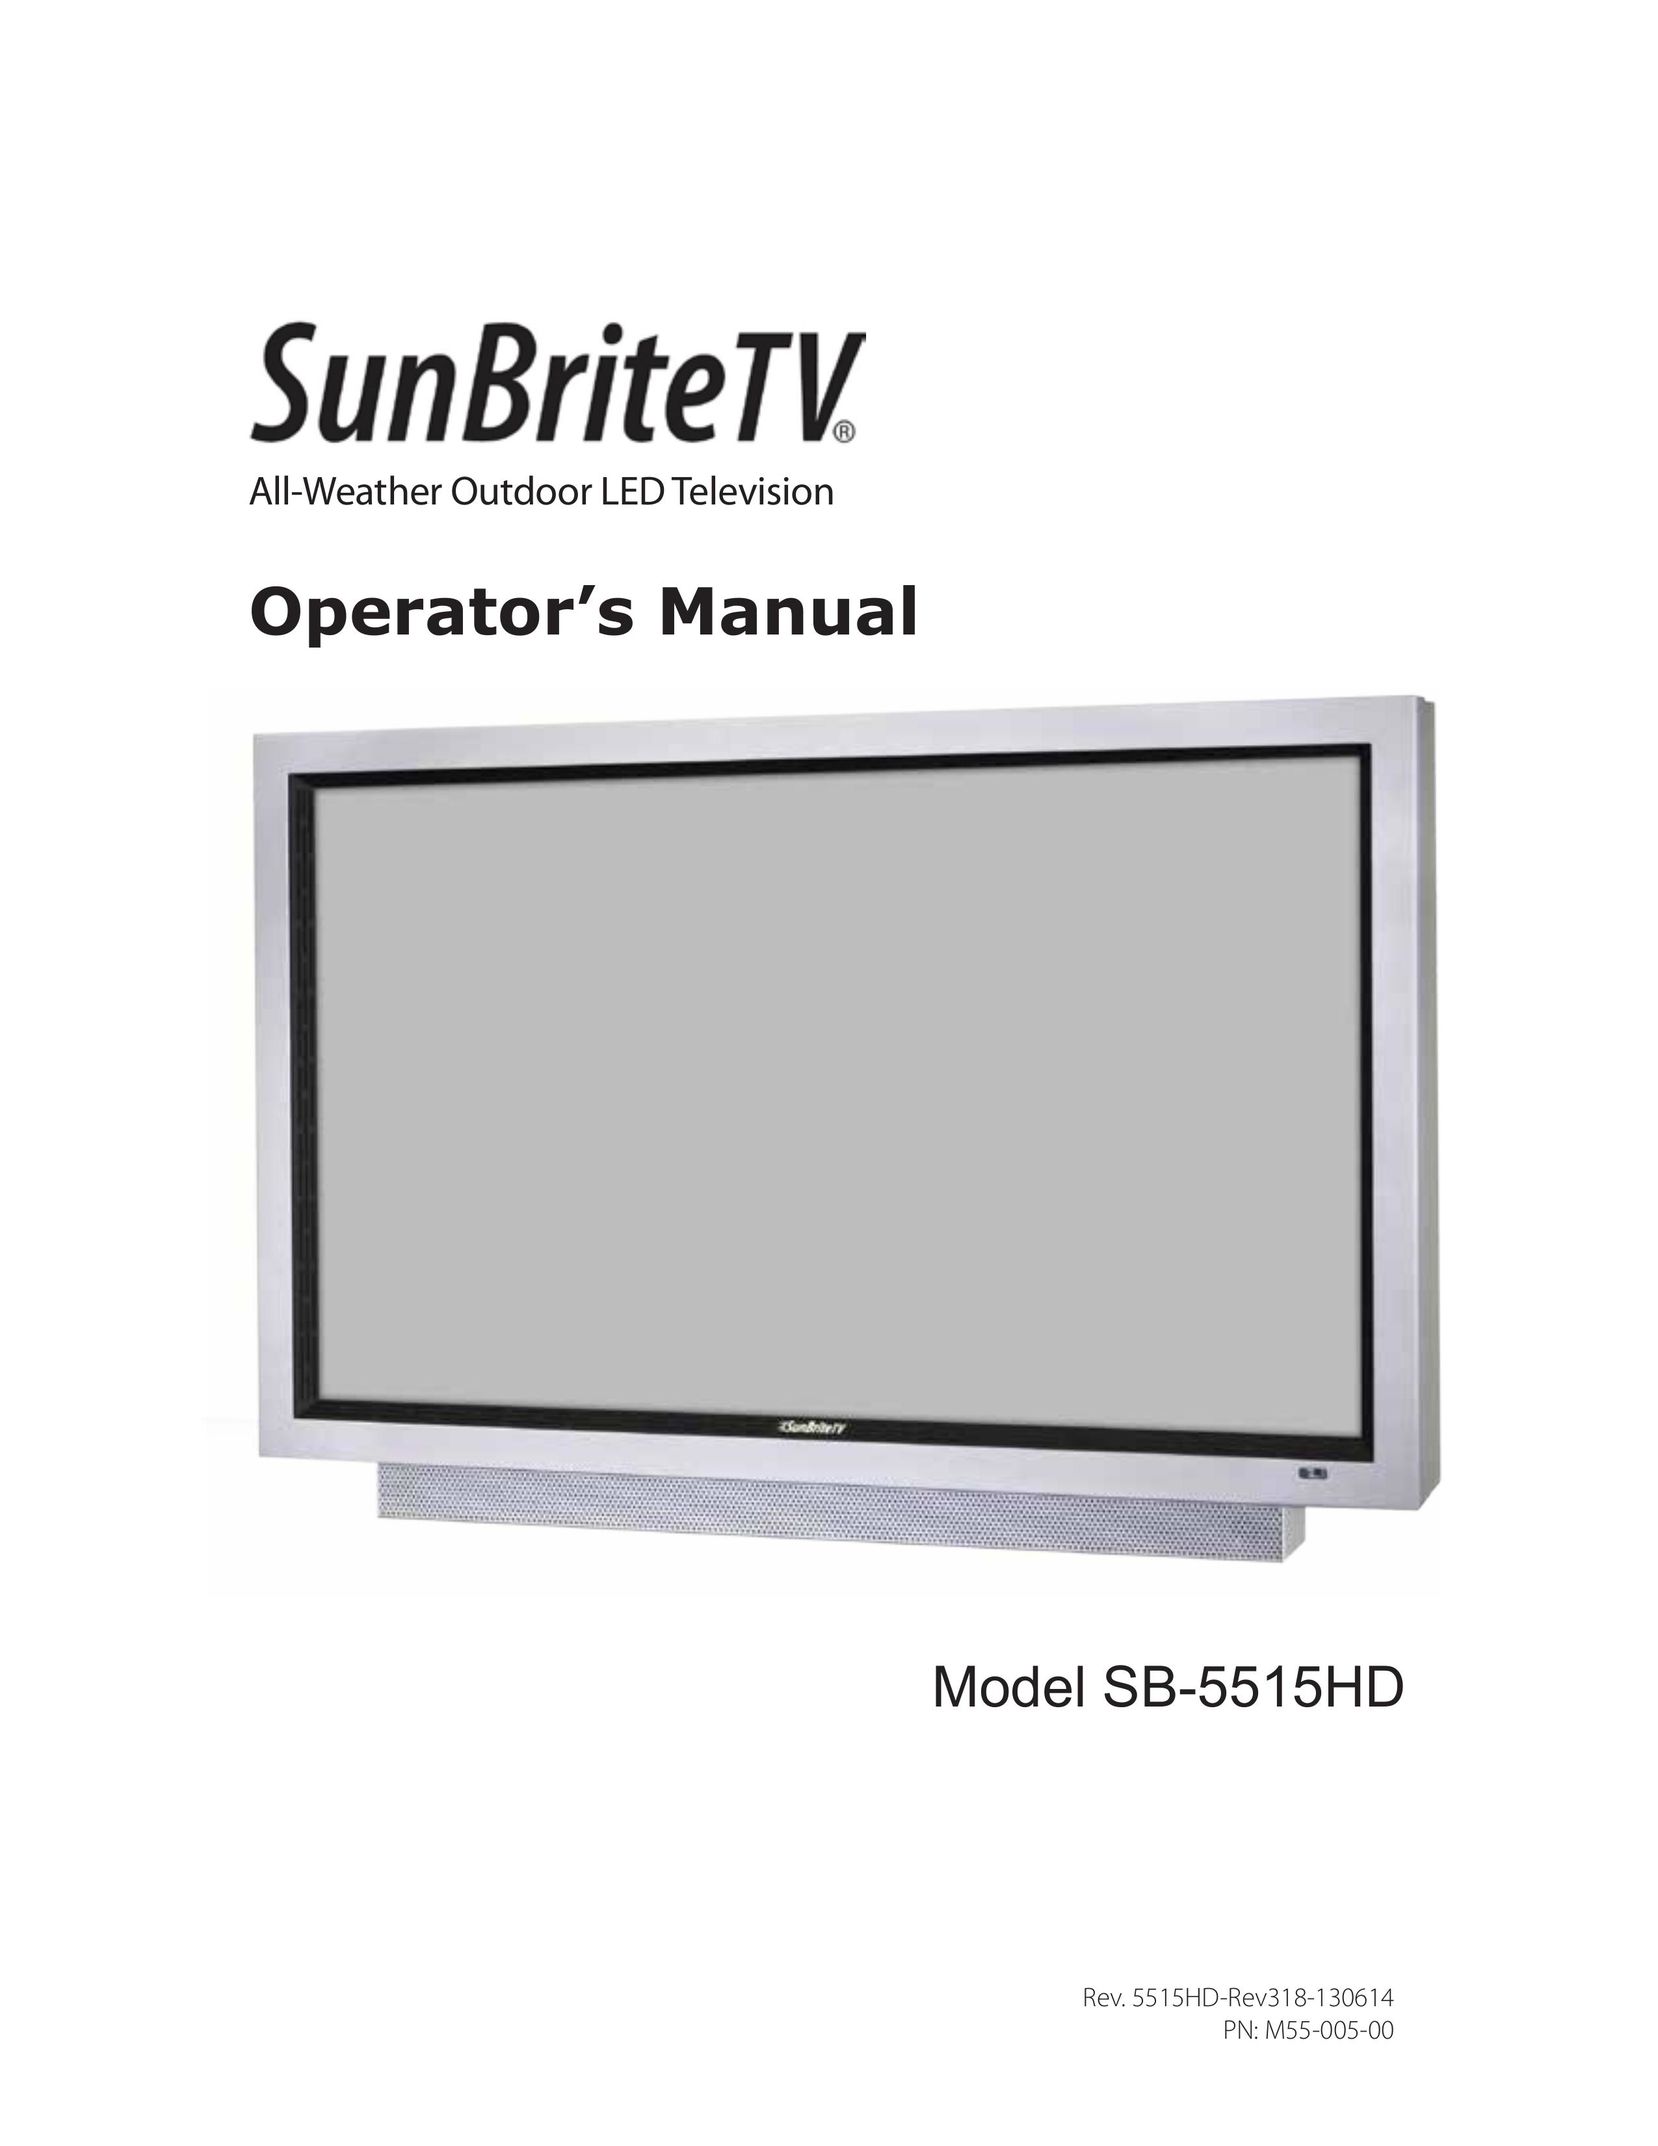 SunBriteTV SB-5515HD CRT Television User Manual